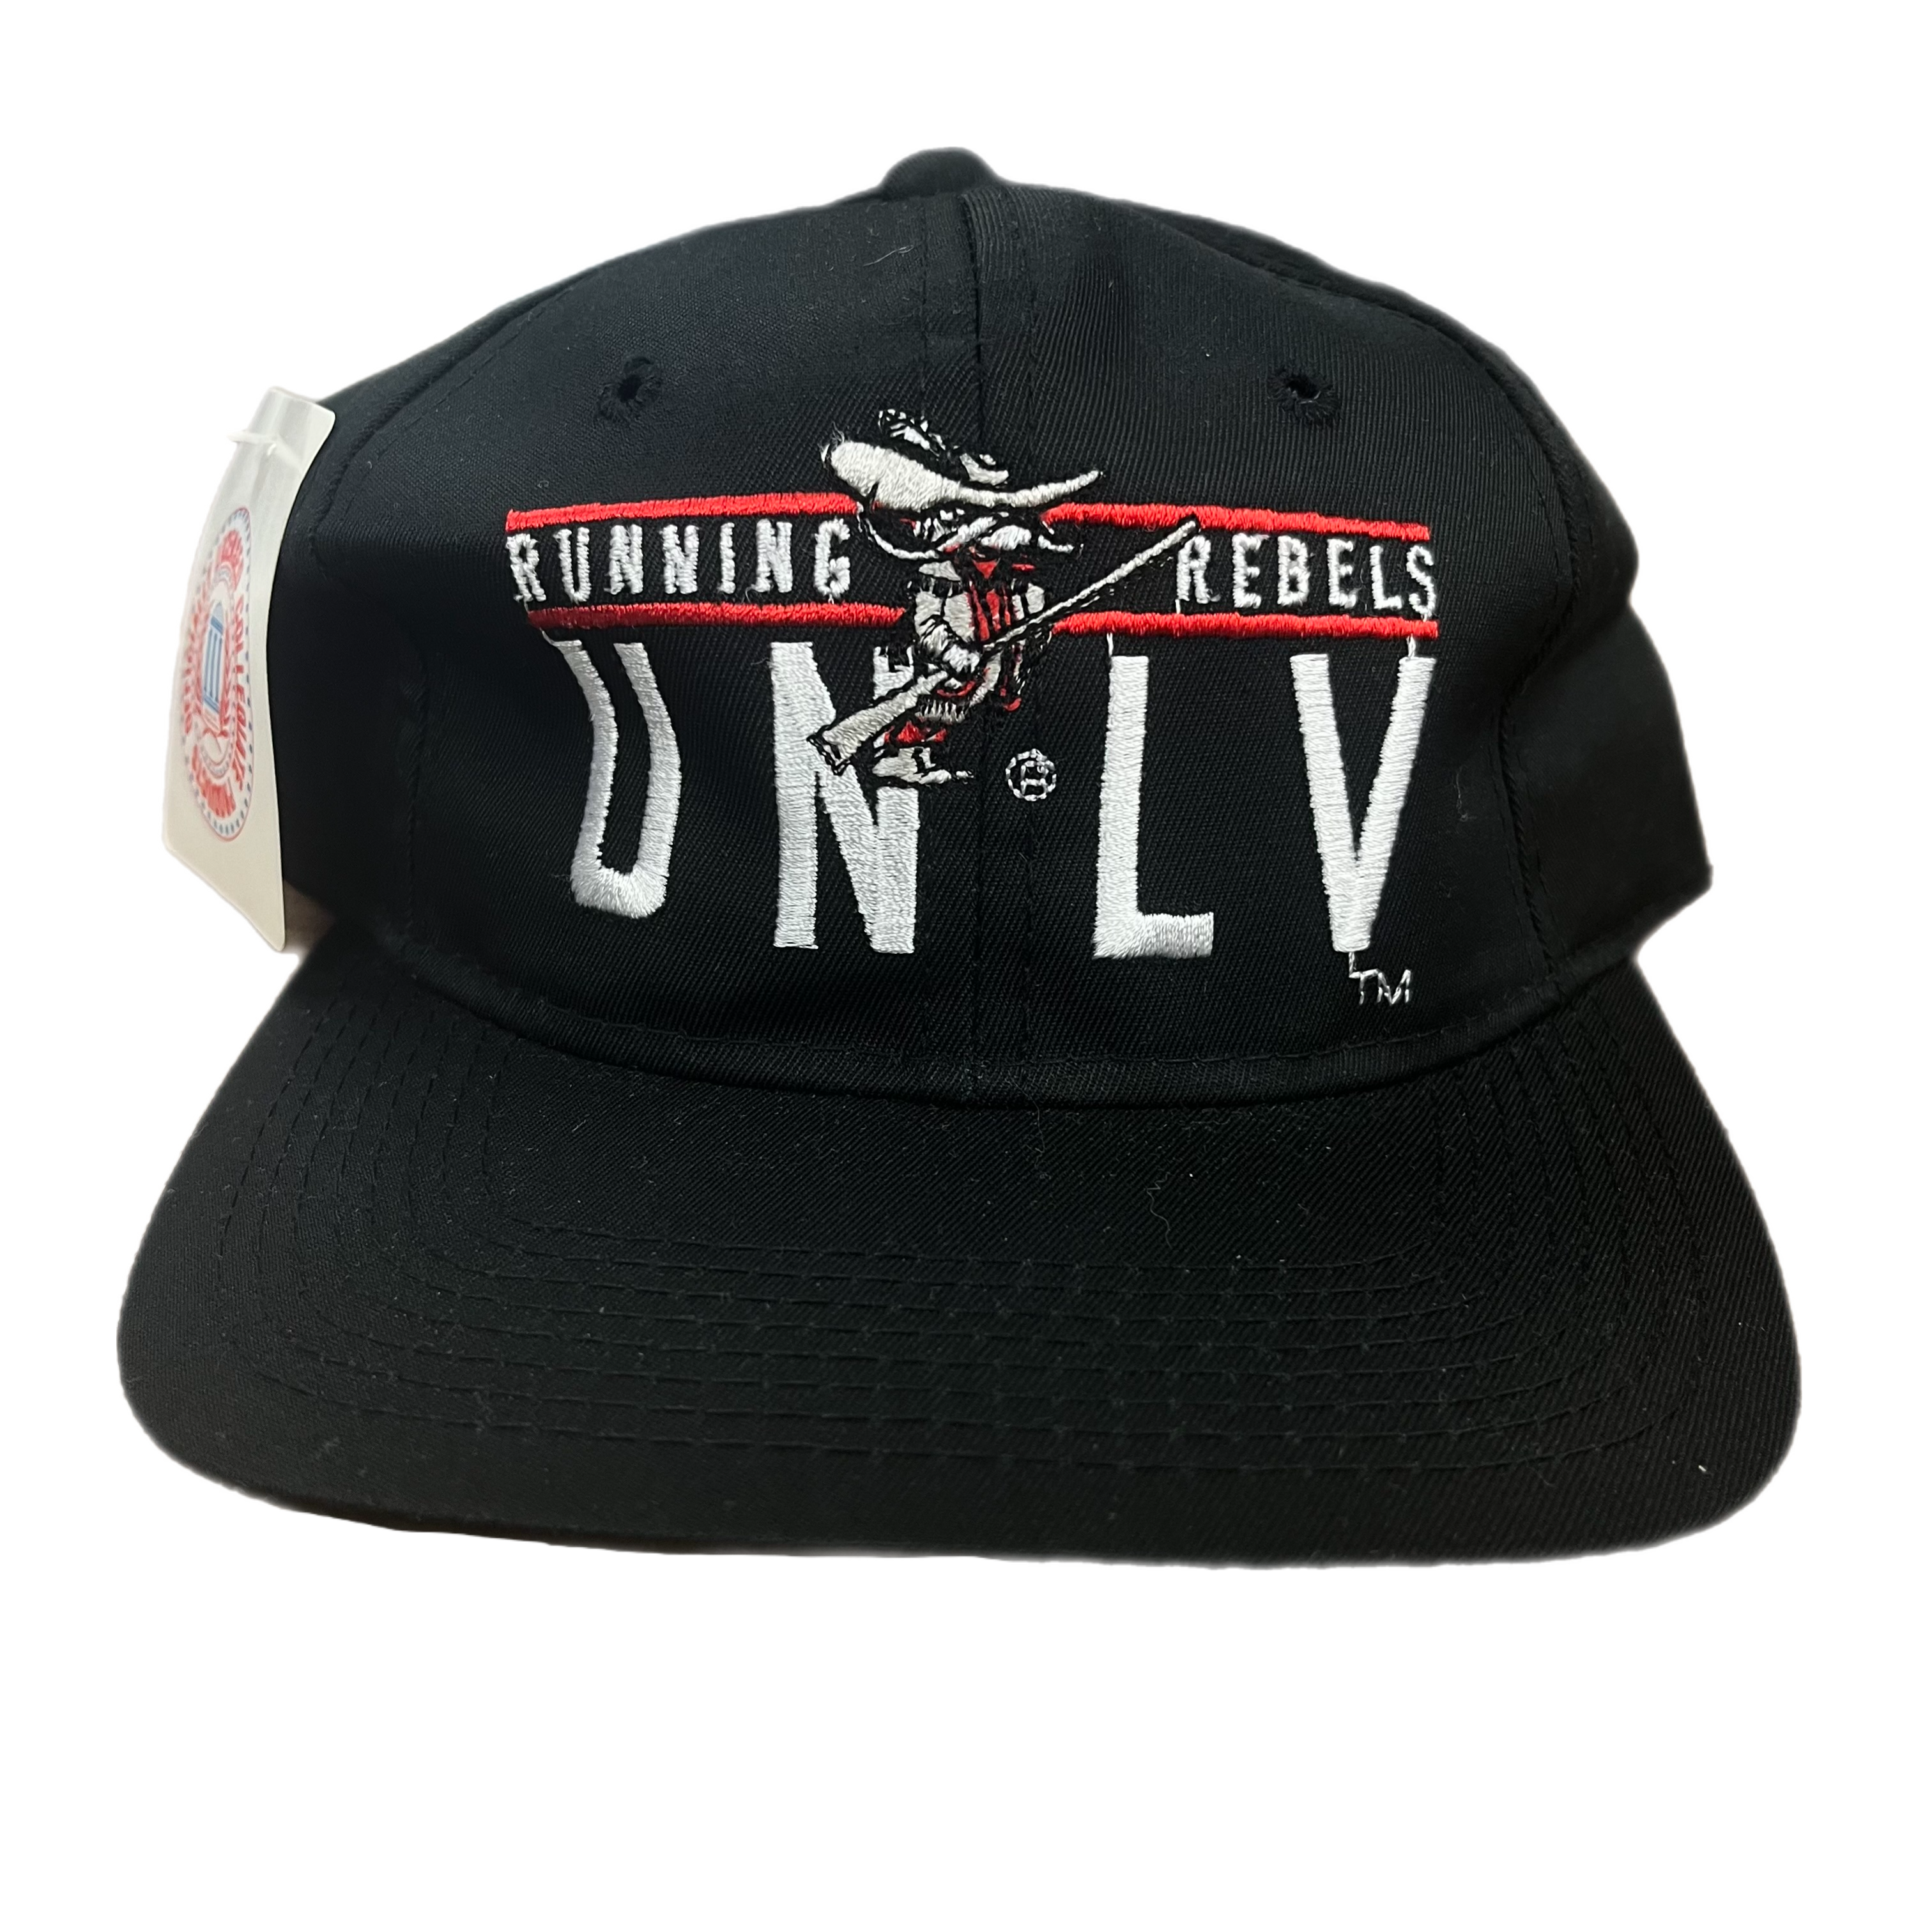 LV Vintage Black Cap